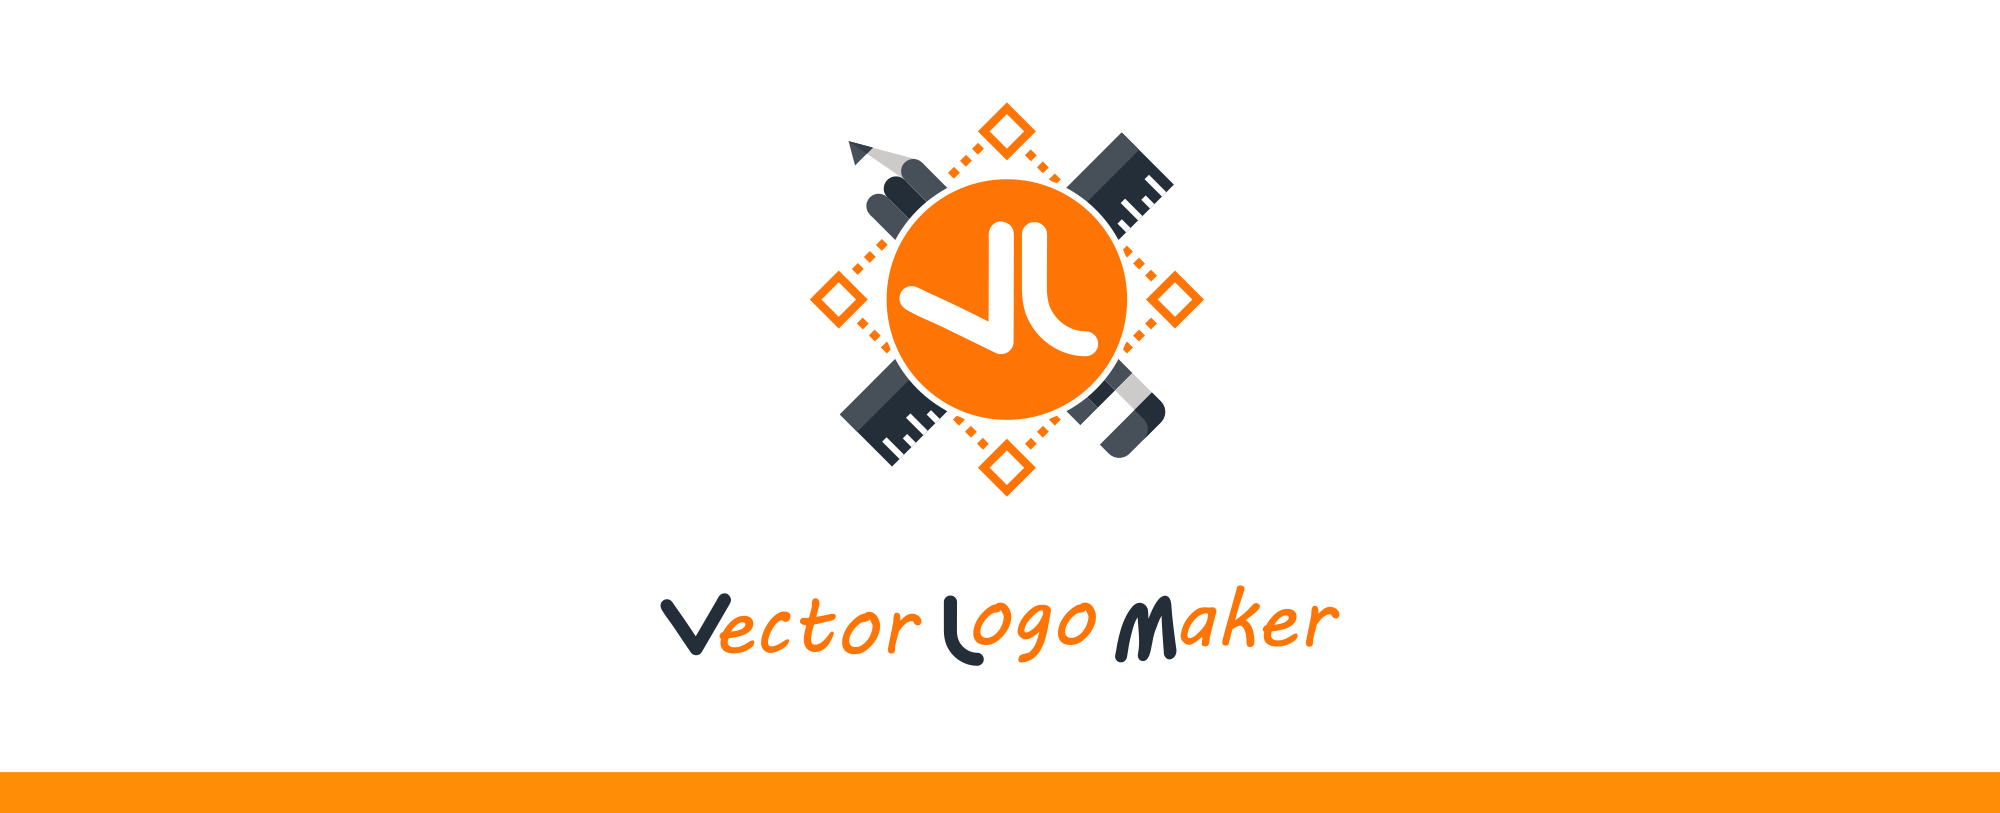 free vector logo maker